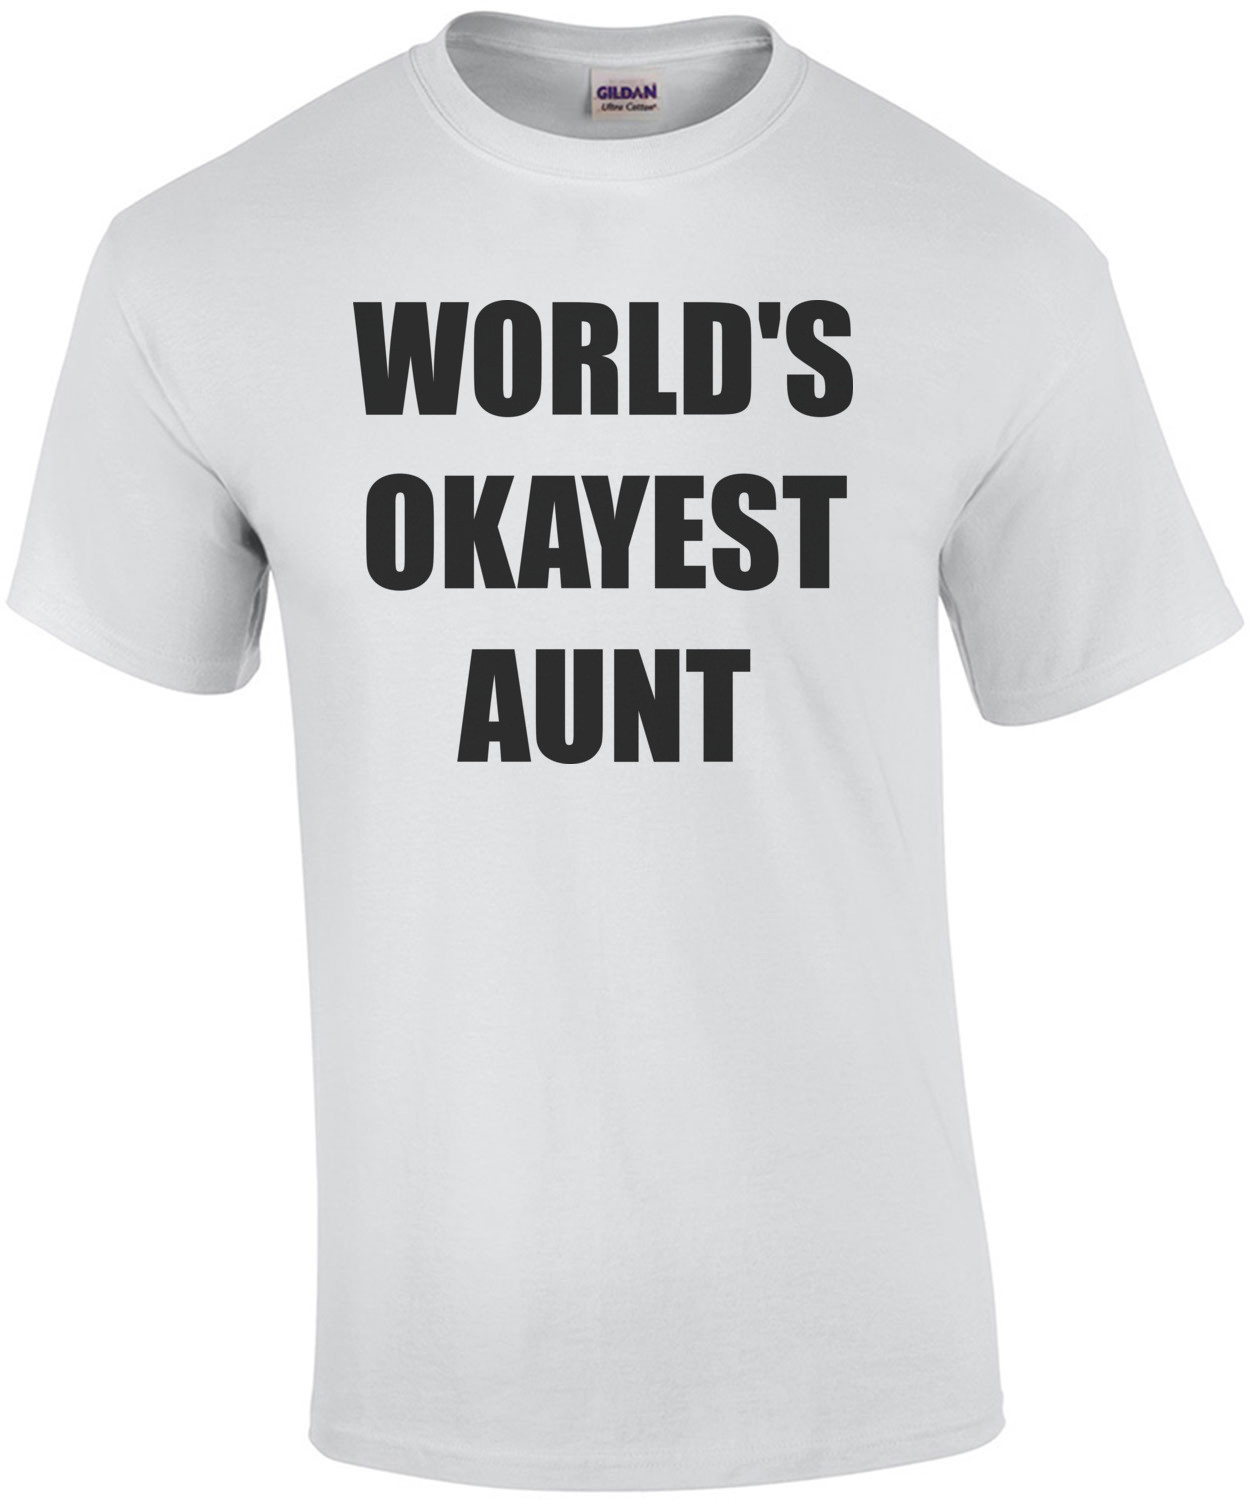 WORLD'S OKAYEST AUNT